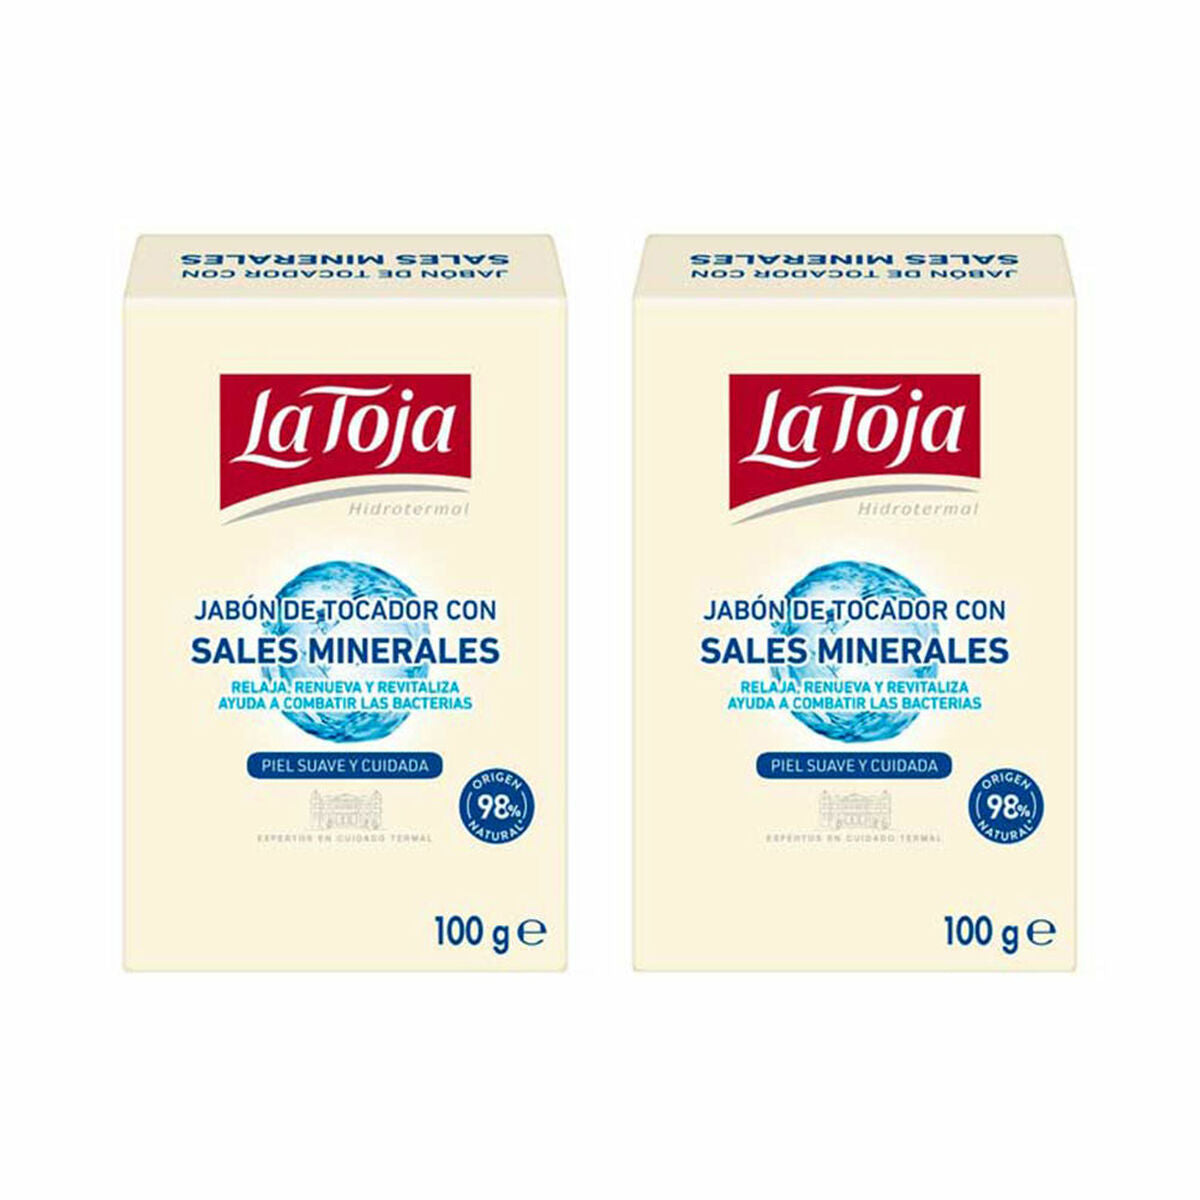 Hand Soap La Toja HIDROTERMAL 100 g 2 Units